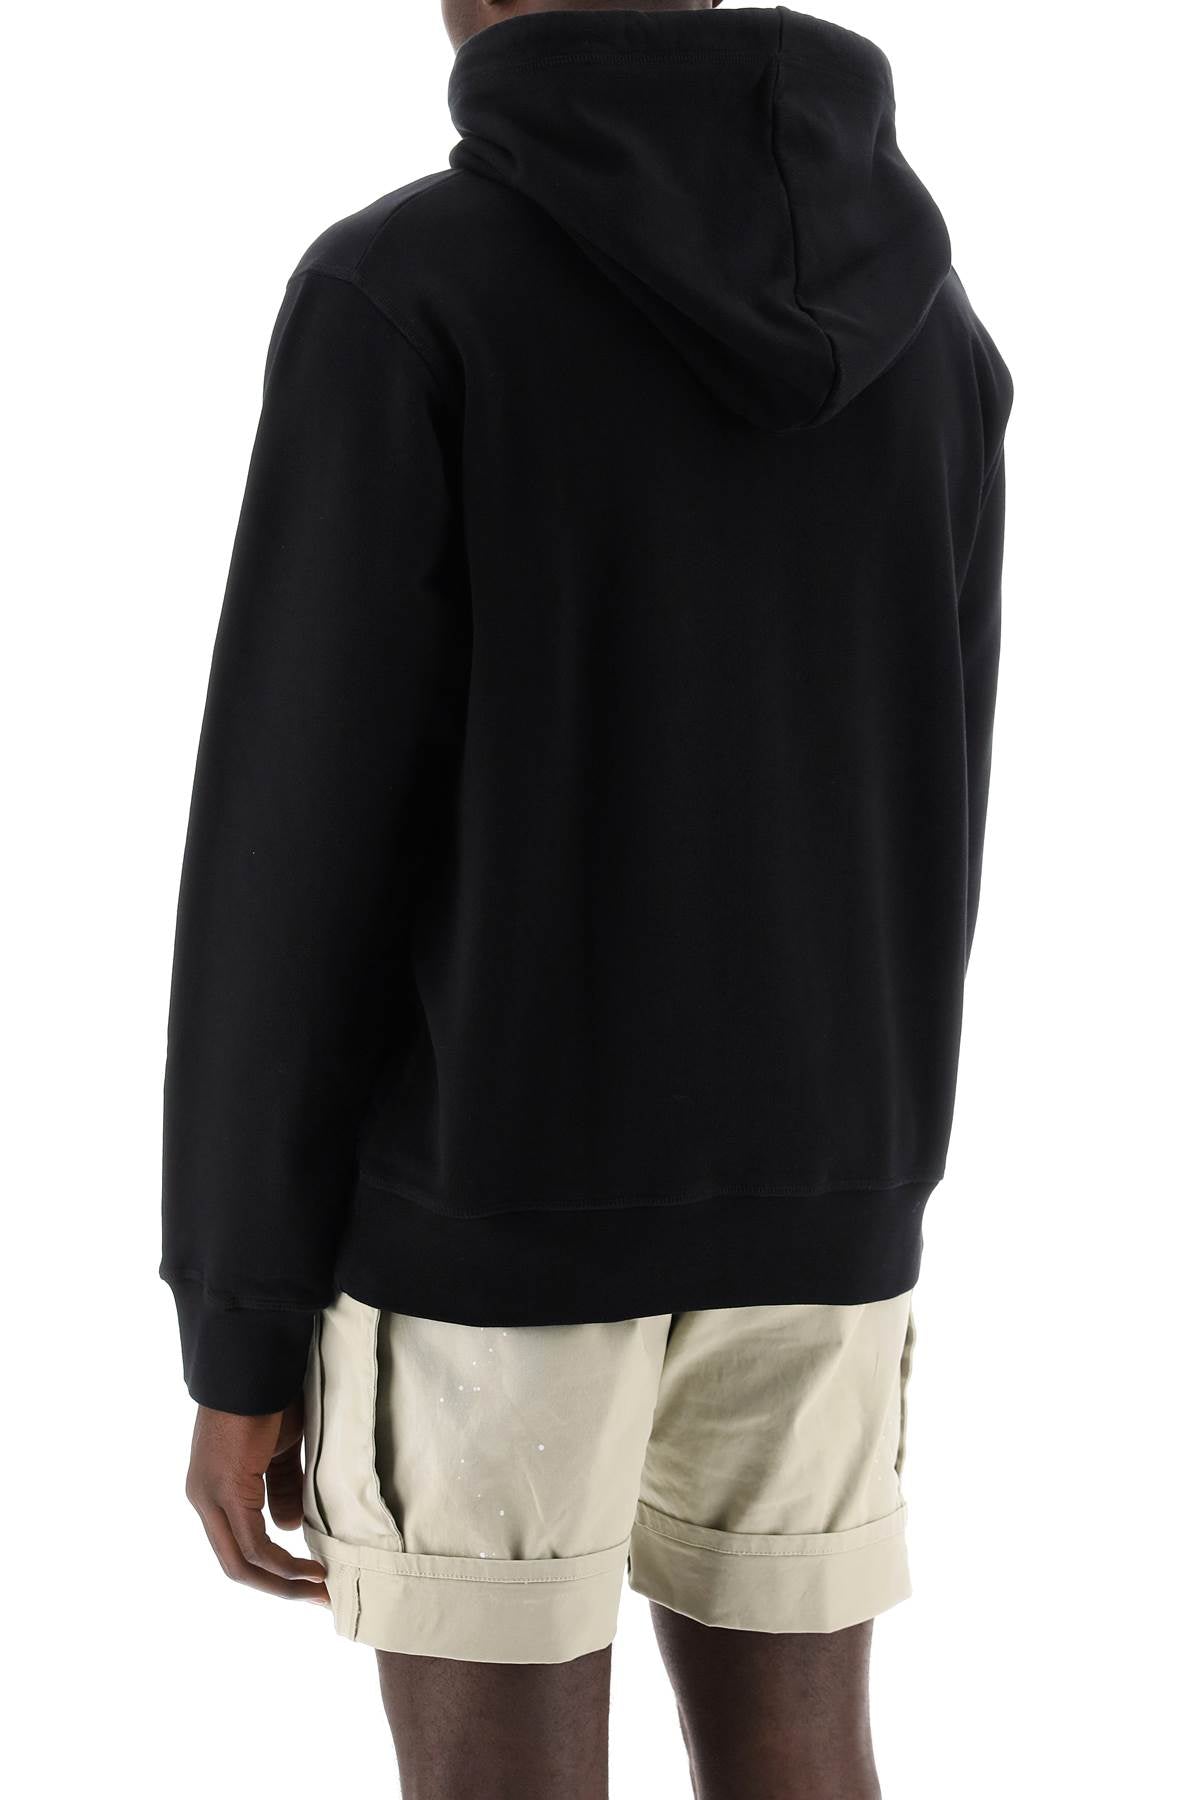 "suburbans cool fit sweatshirt-2